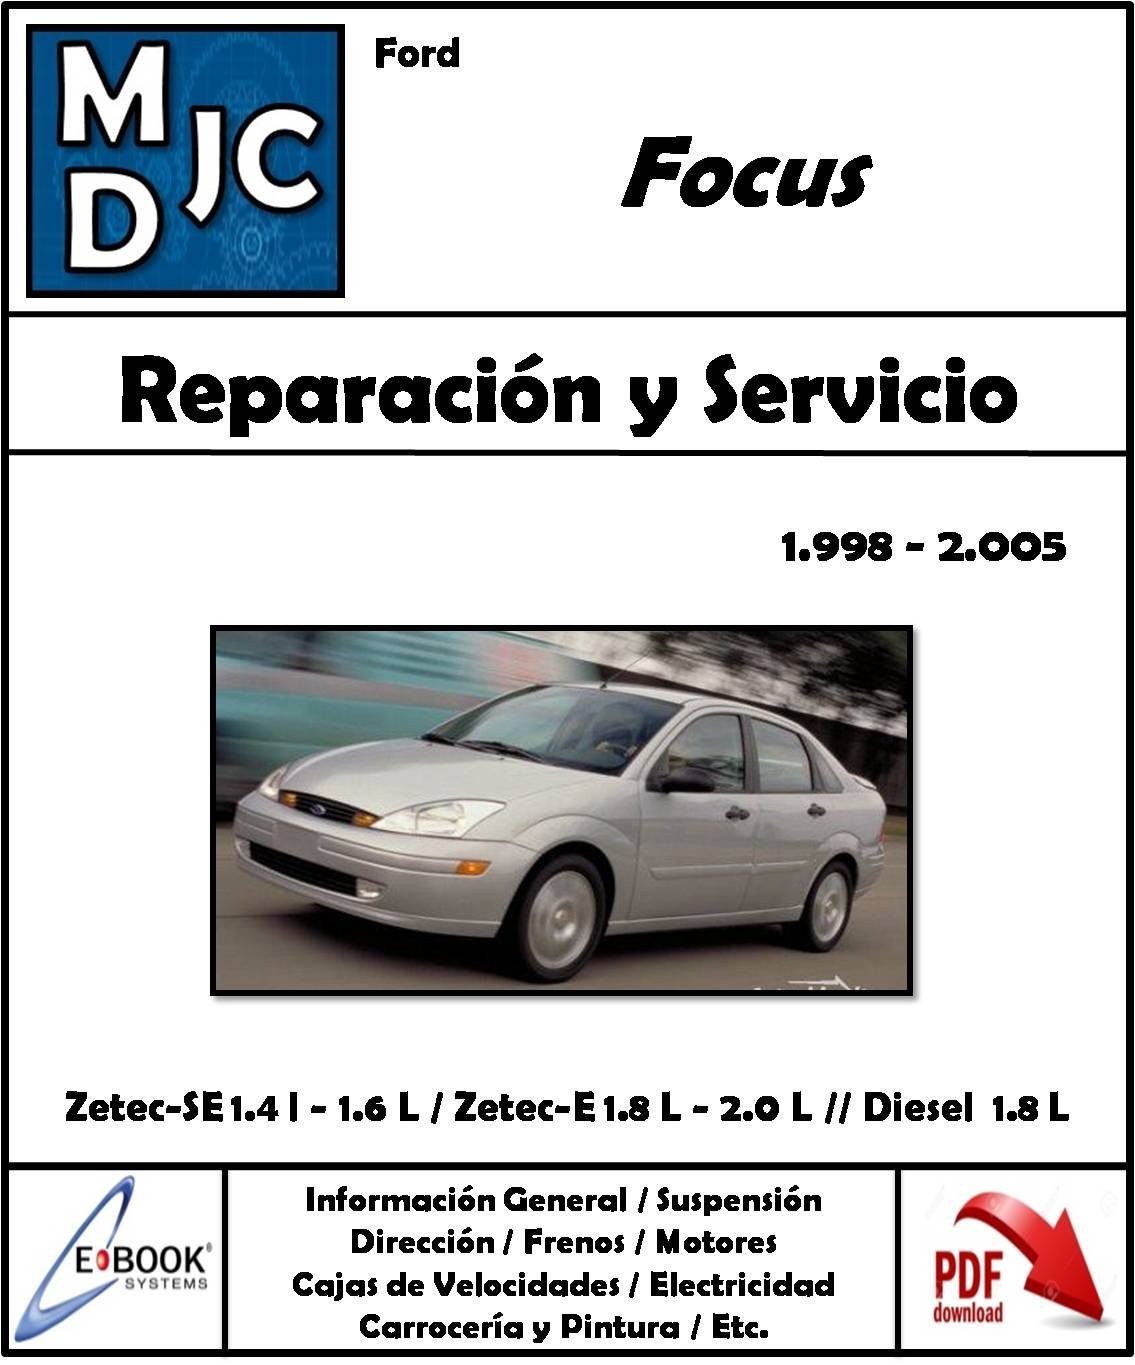 Ford Focus 1998 - 2005